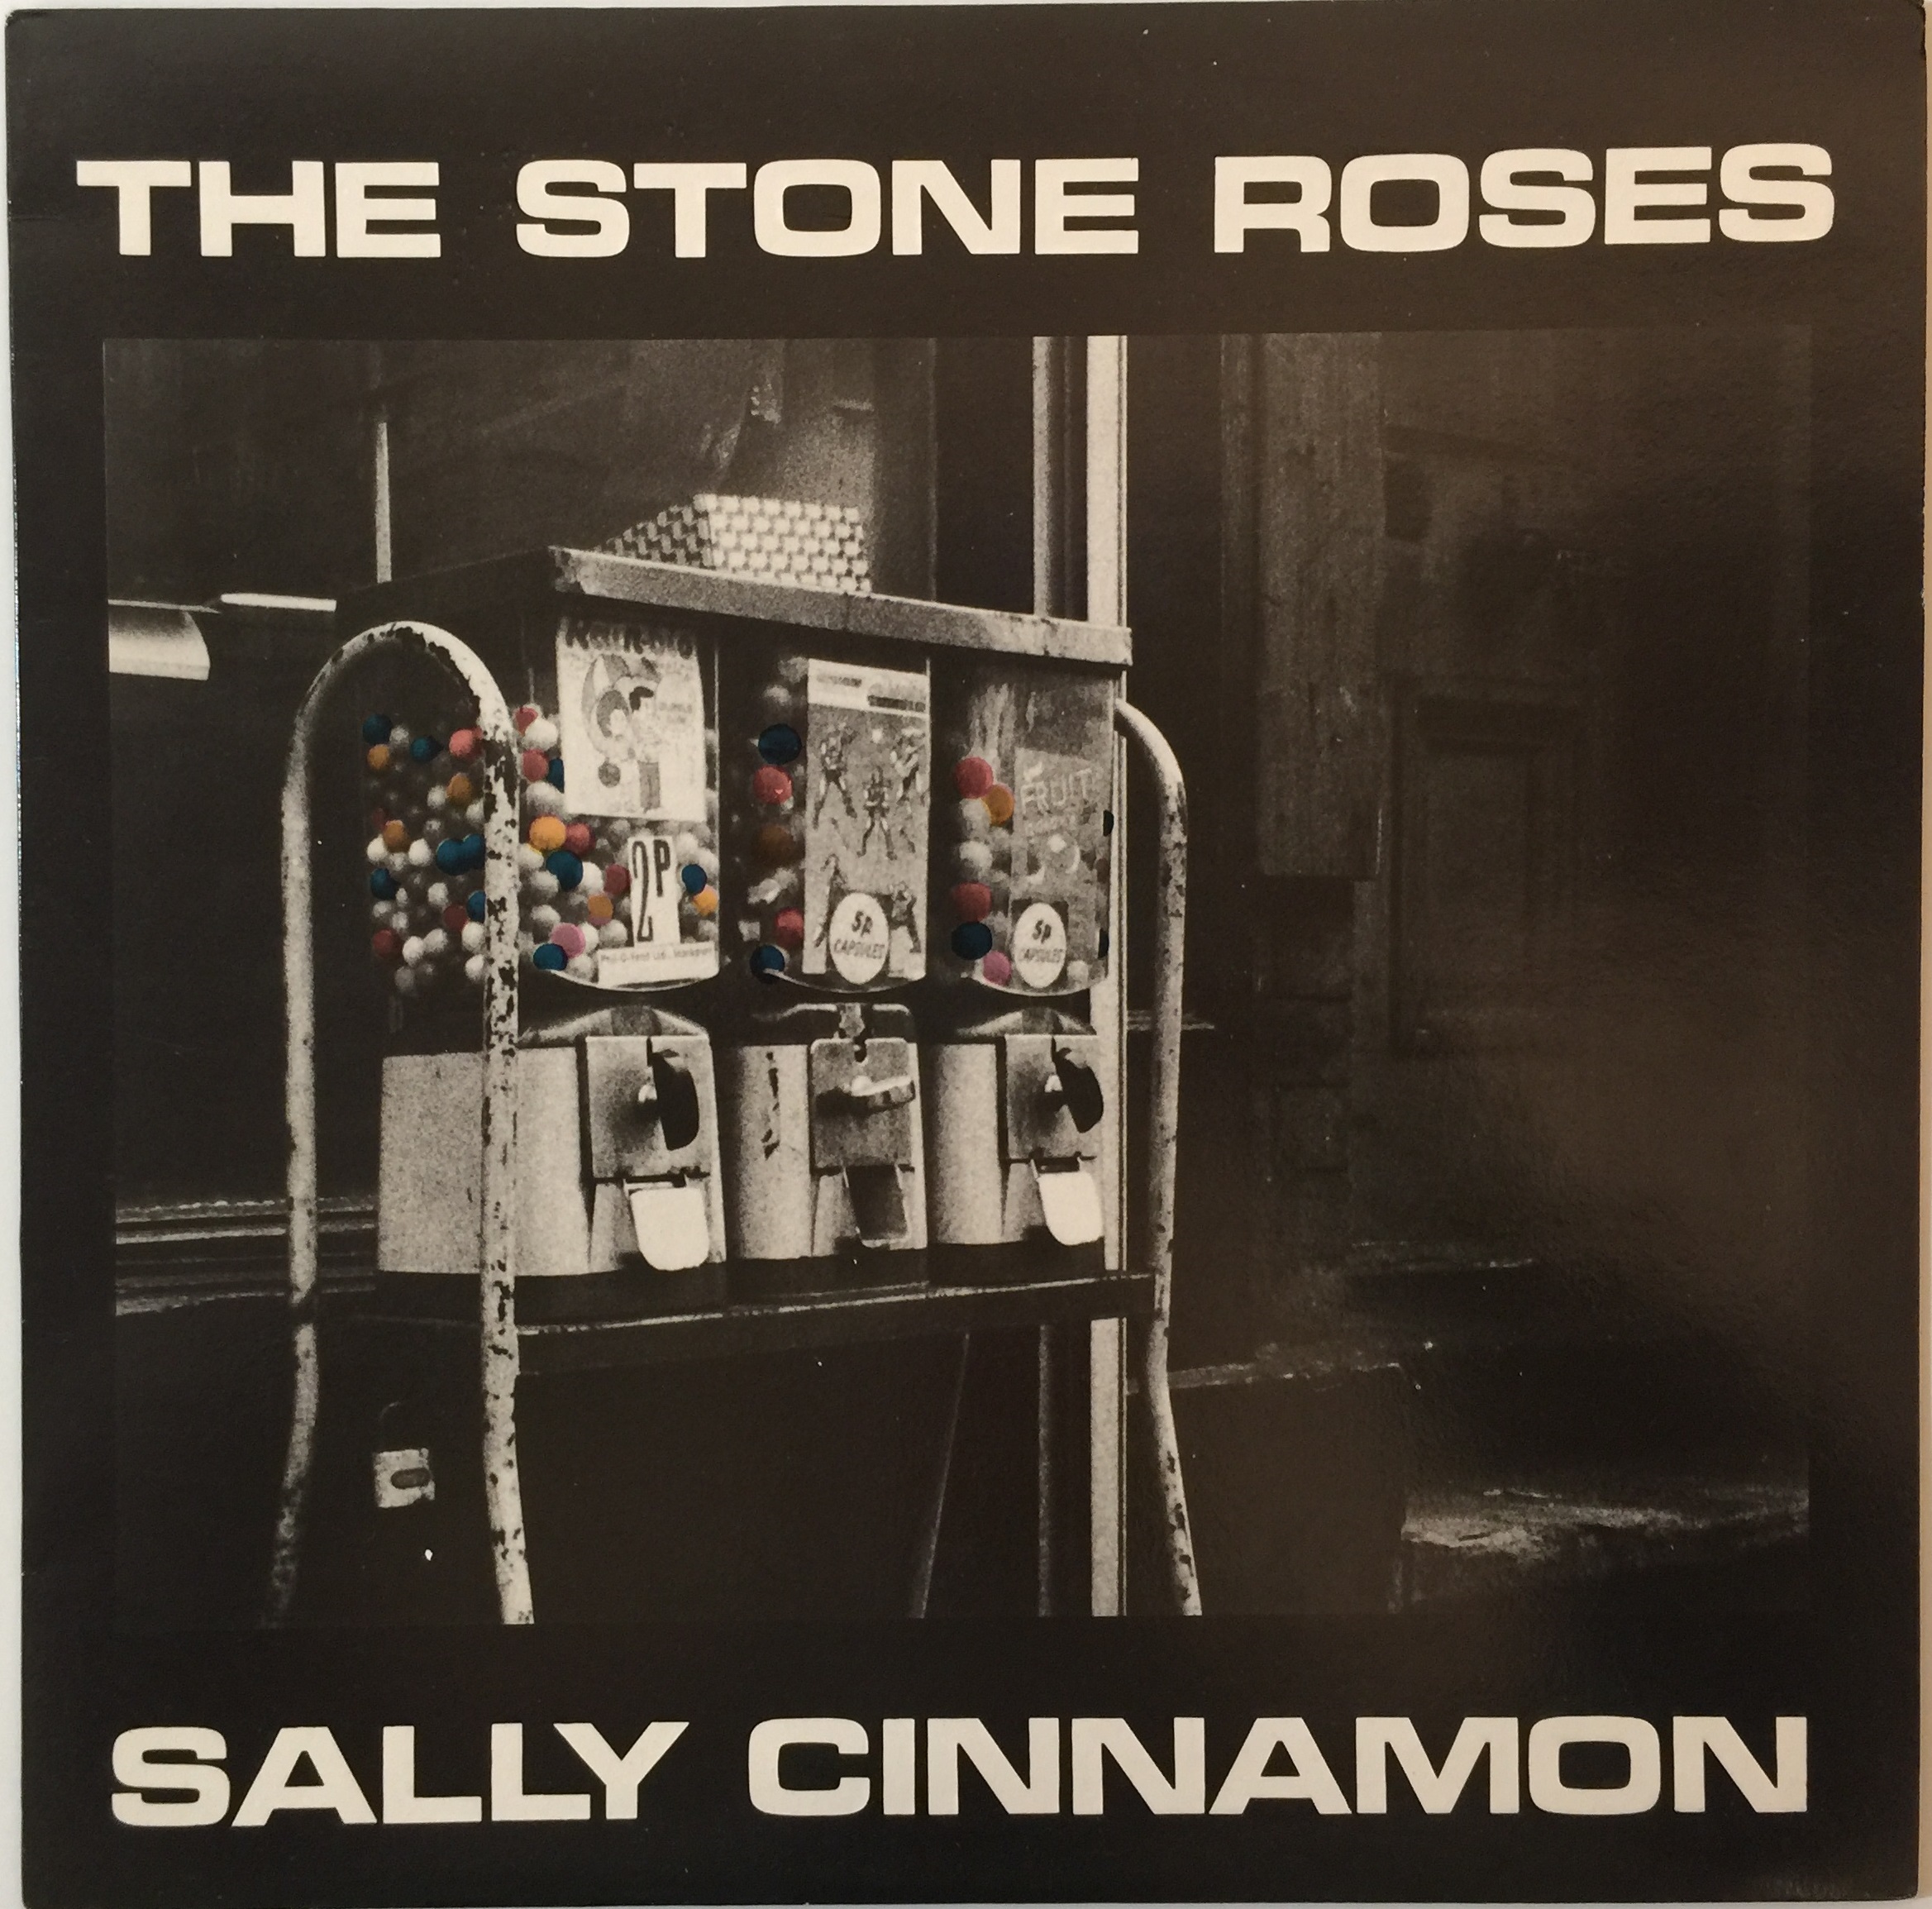 Lot 75 - THE STONE ROSES - SALLY CINNAMON 12